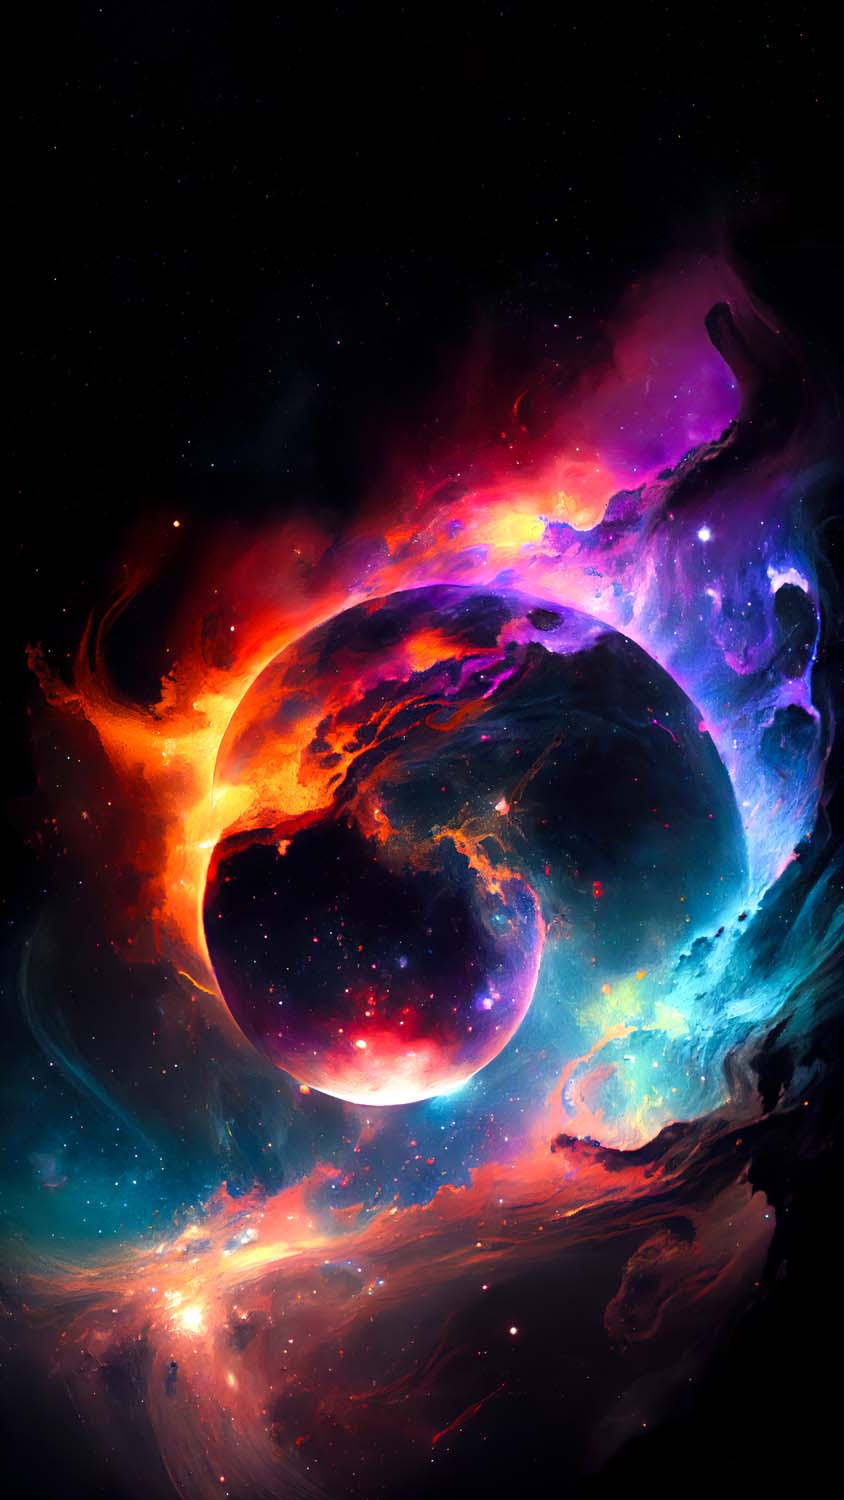 Space Nebula Images  Free Download on Freepik